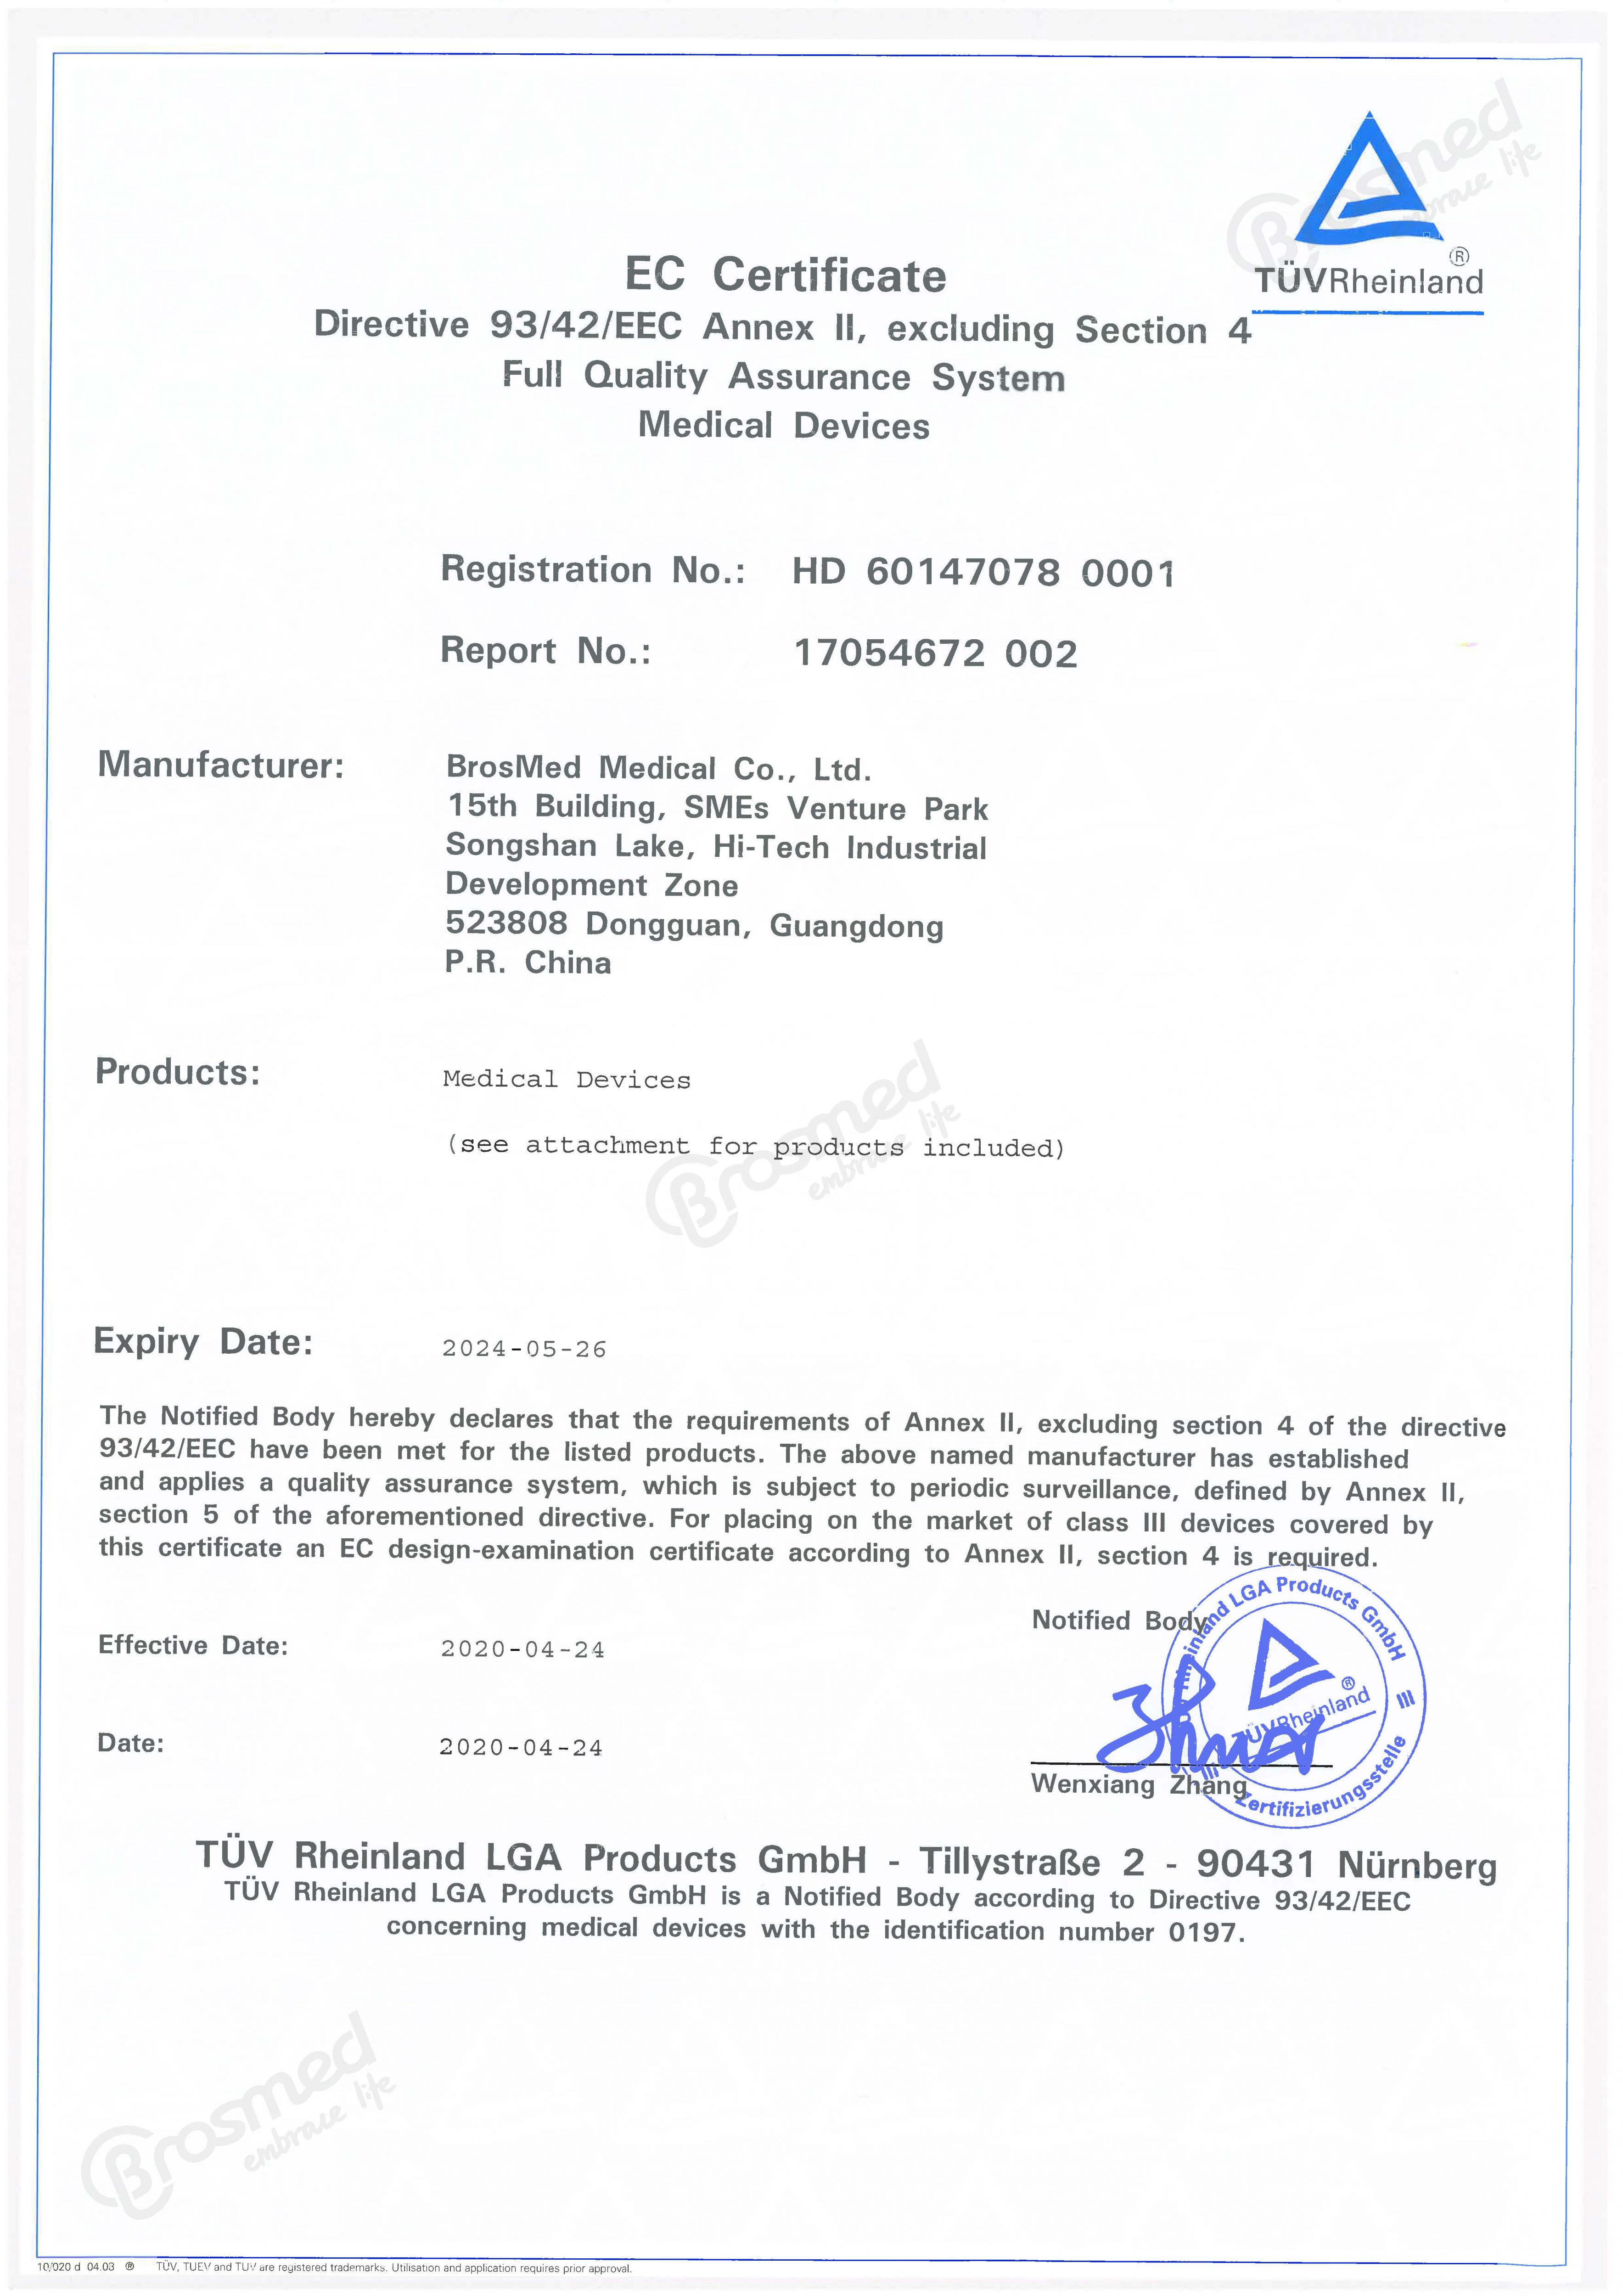 CE Certificates – Accessories